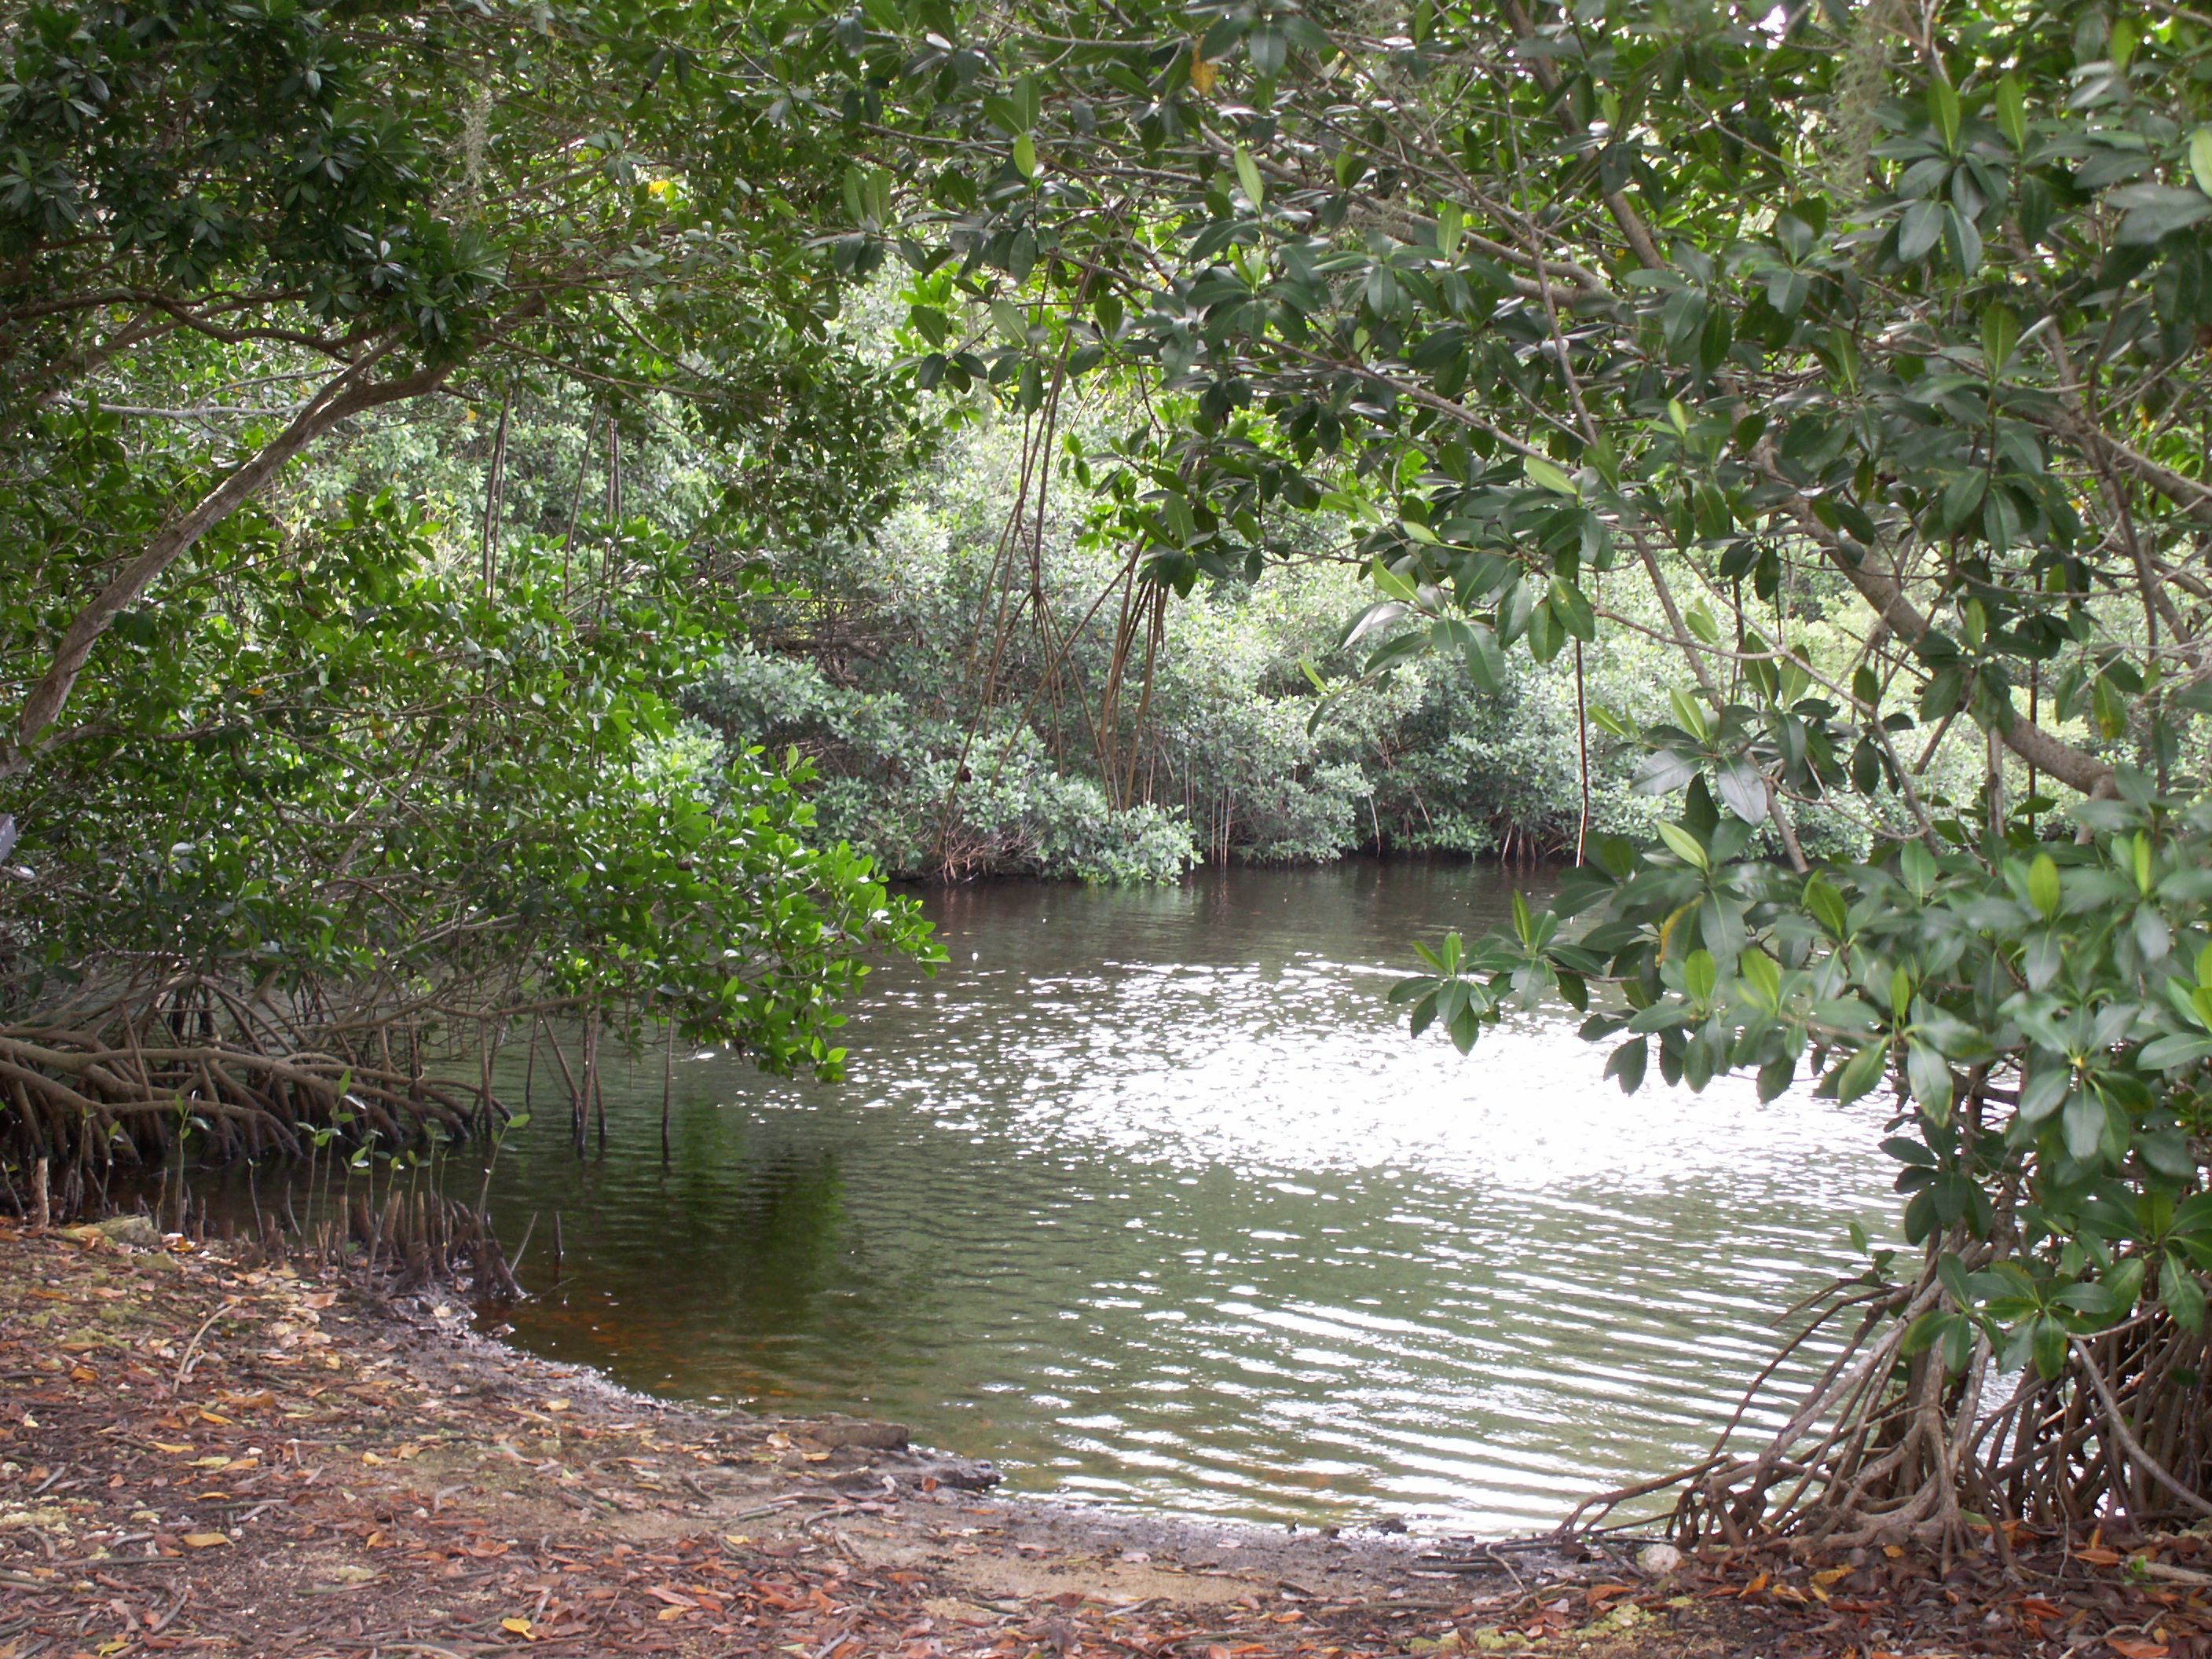 File:Mangrove trees in Everglades.JPG - Wikipedia, the free encyclopedia